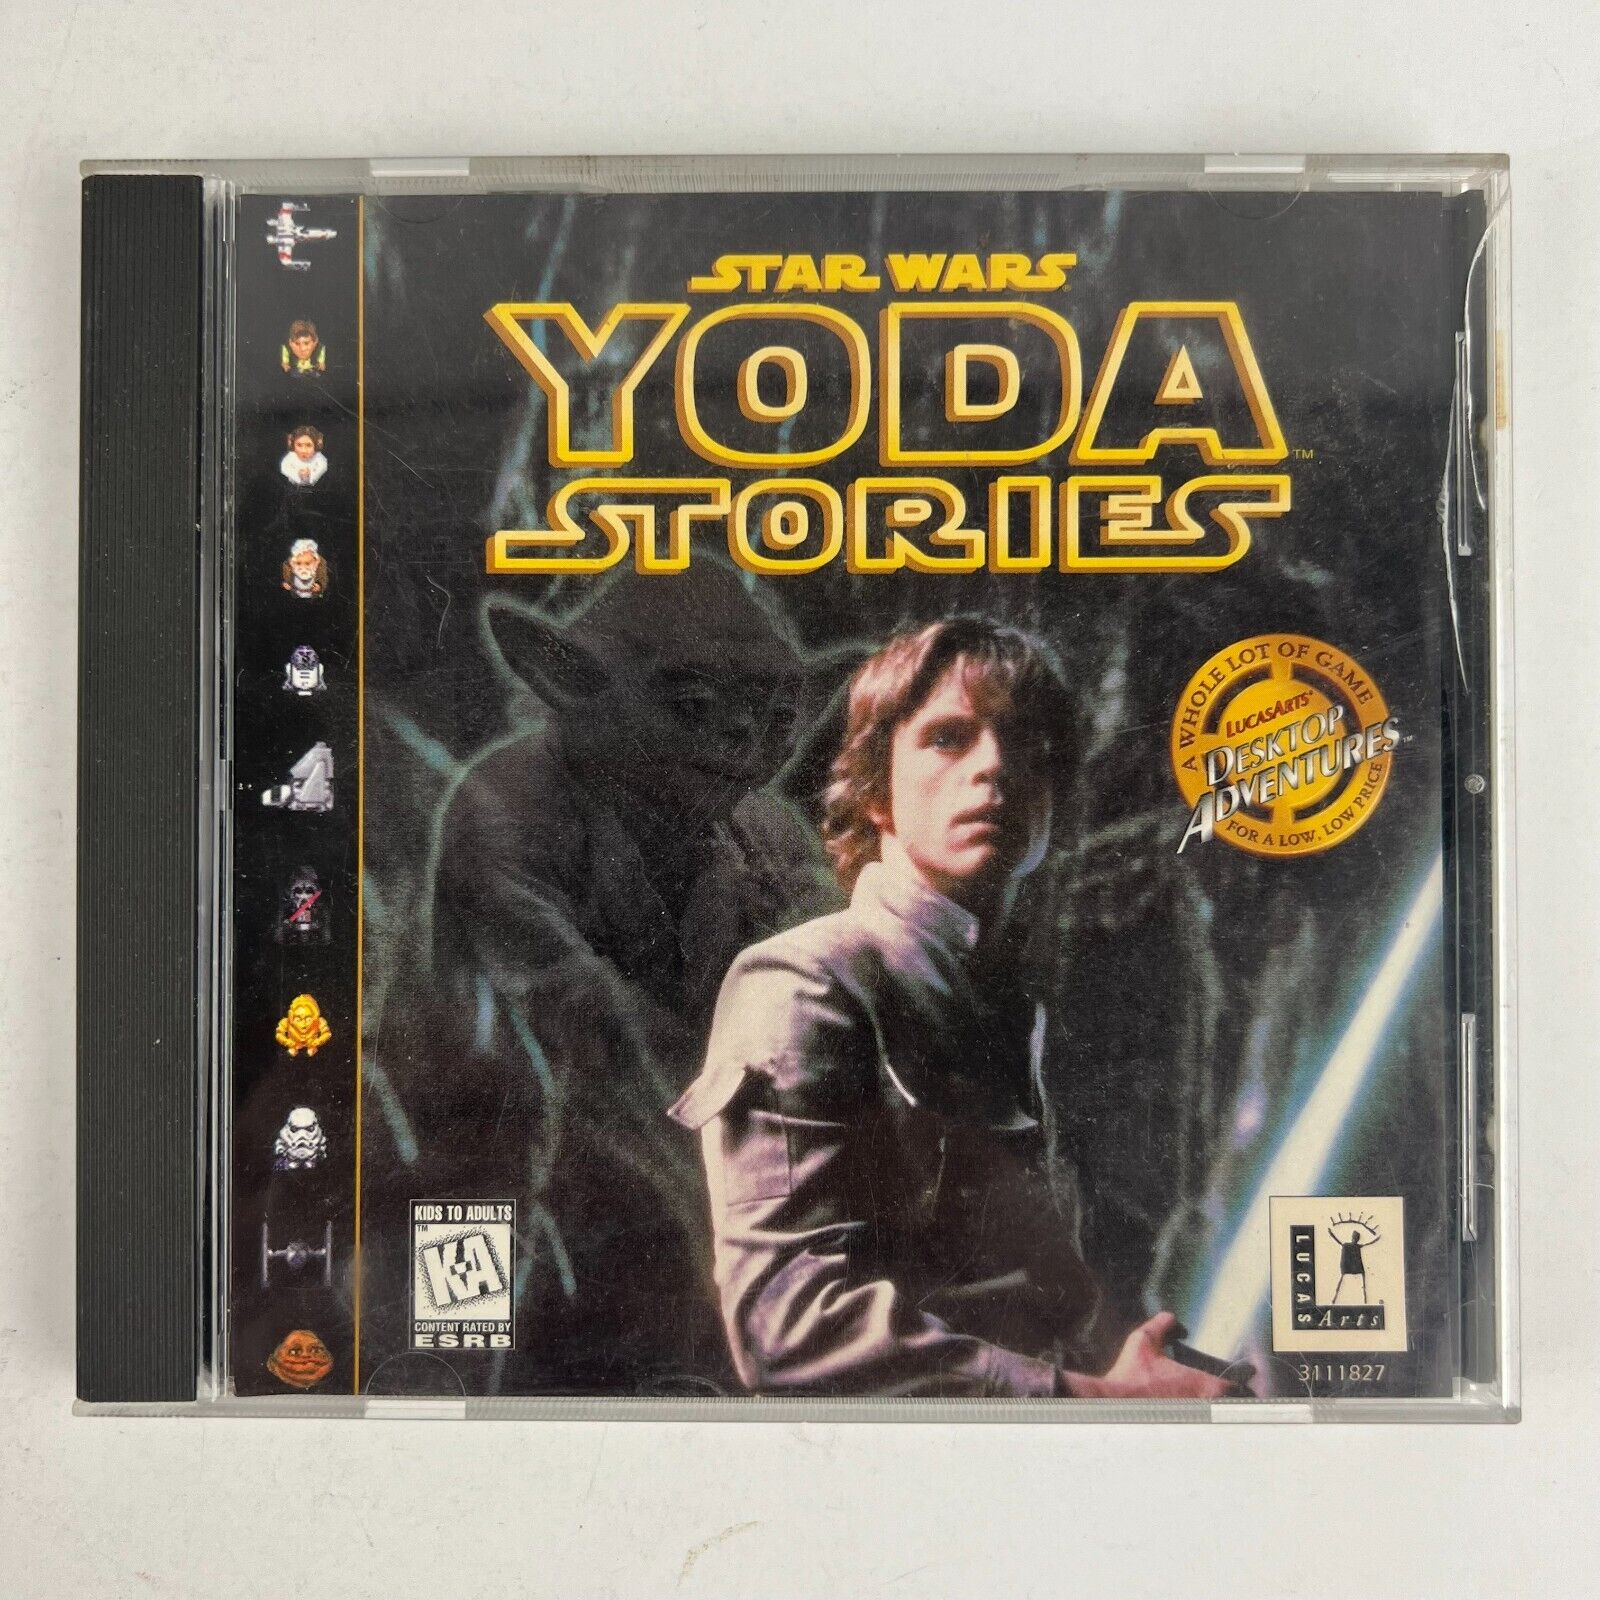 Star Wars Yoda Stories PC CD-Rom Game 1997